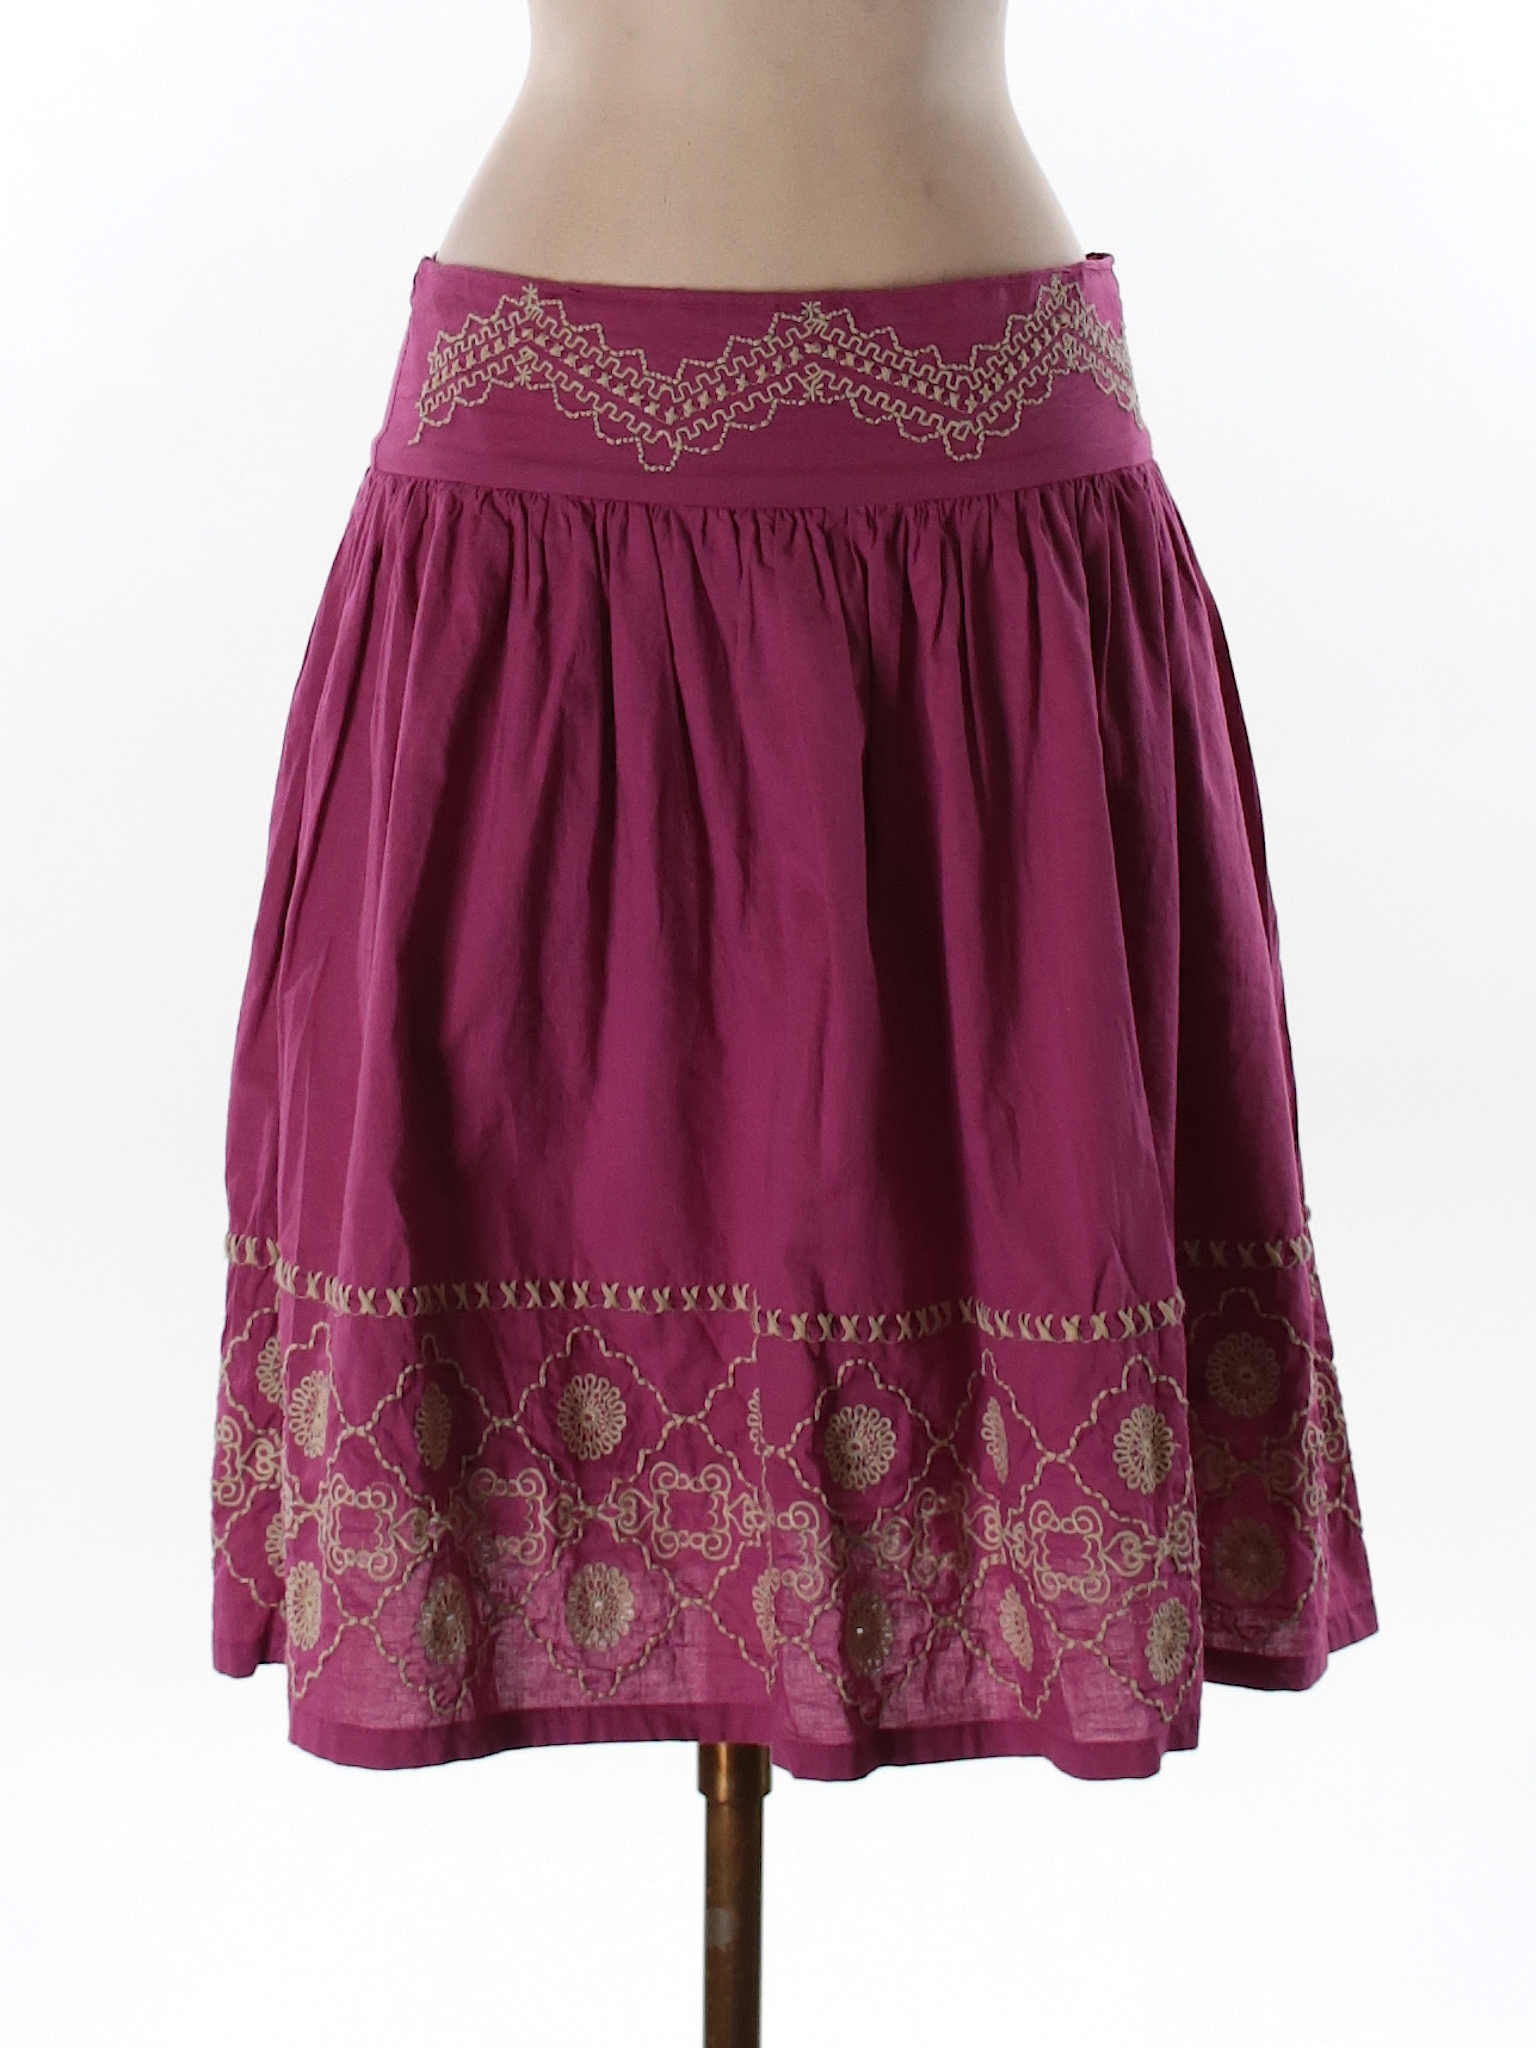 Glam Vintage Soul Casual Skirt - 84% off only on thredUP